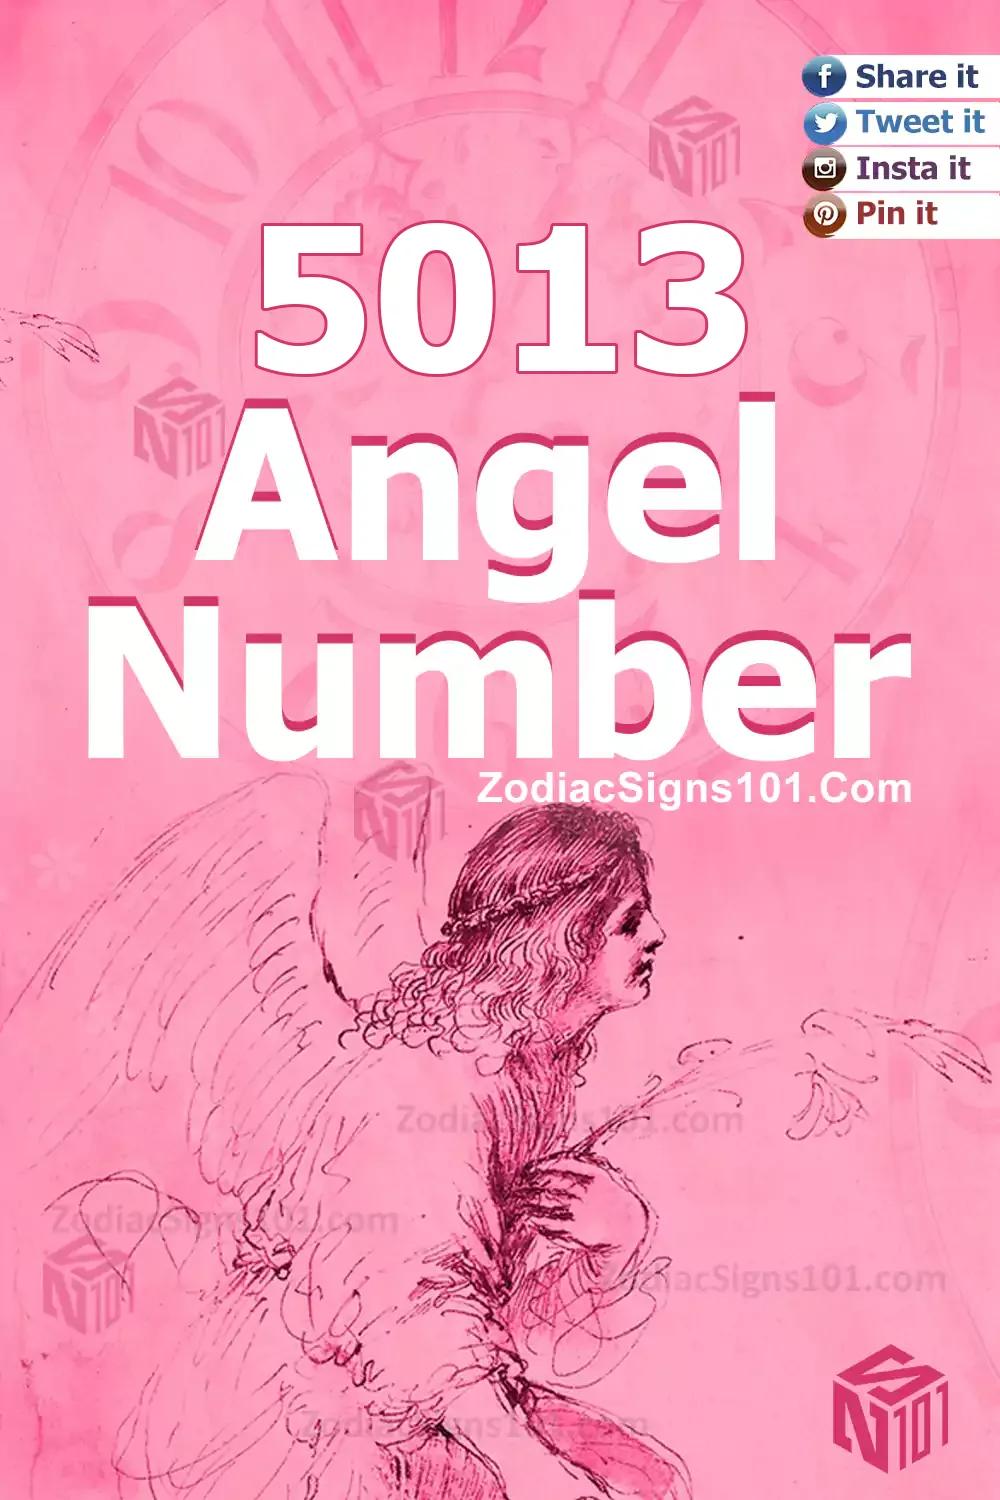 5013-Angel-Number-Meaning.jpg